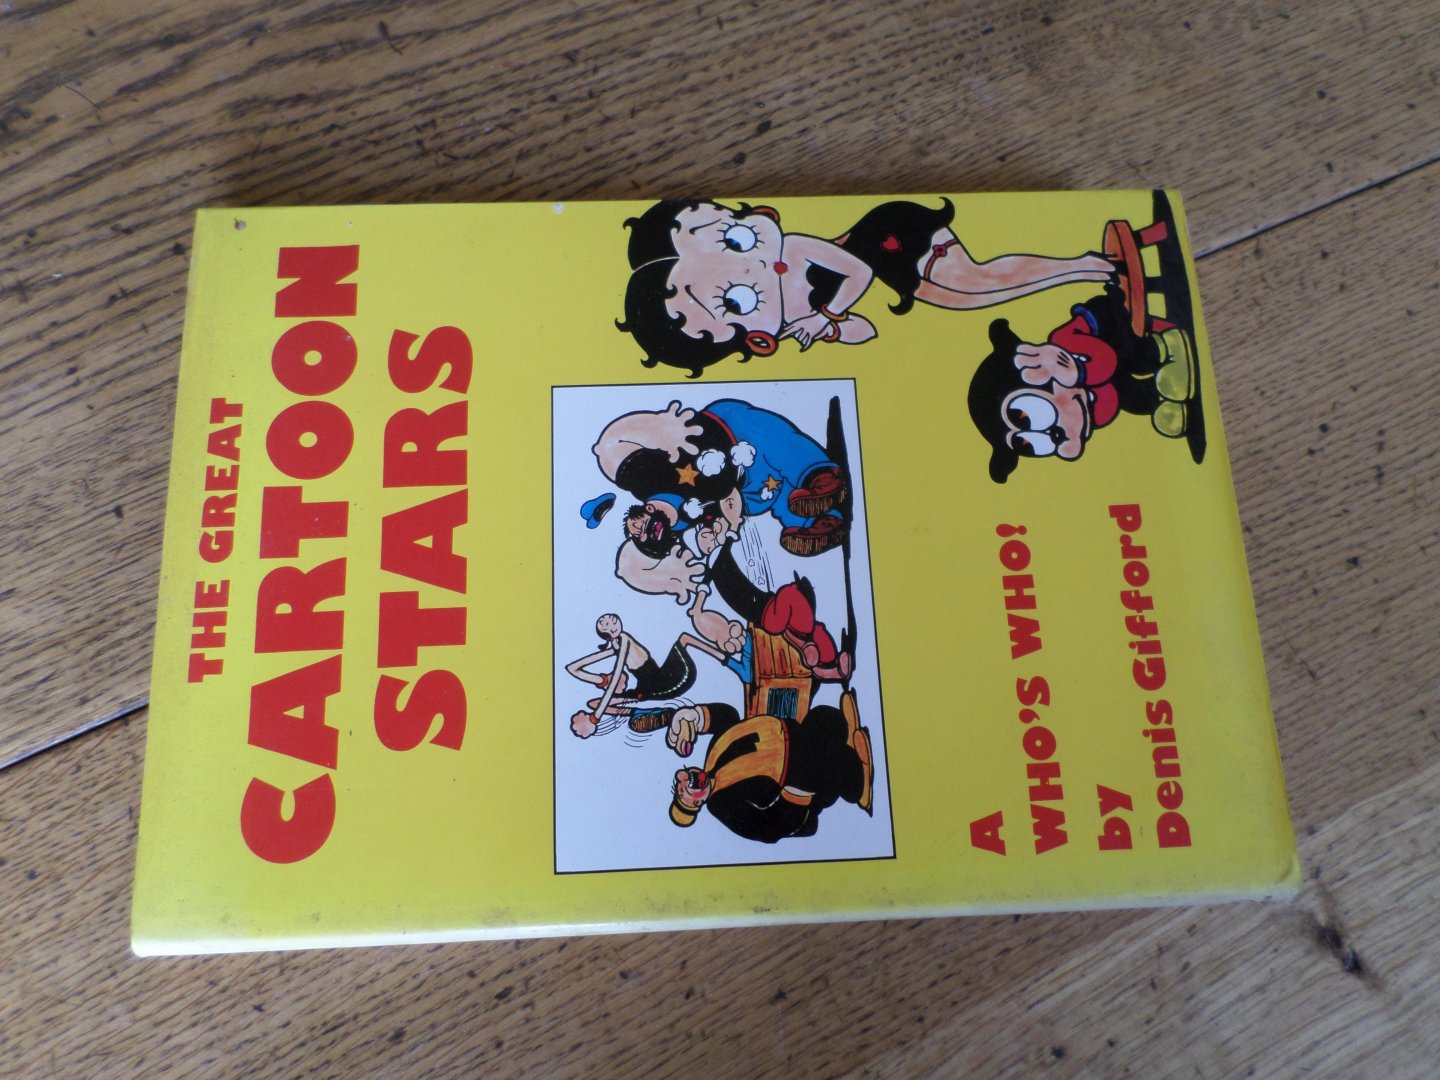 Gifford, Denis - The great cartoon stars